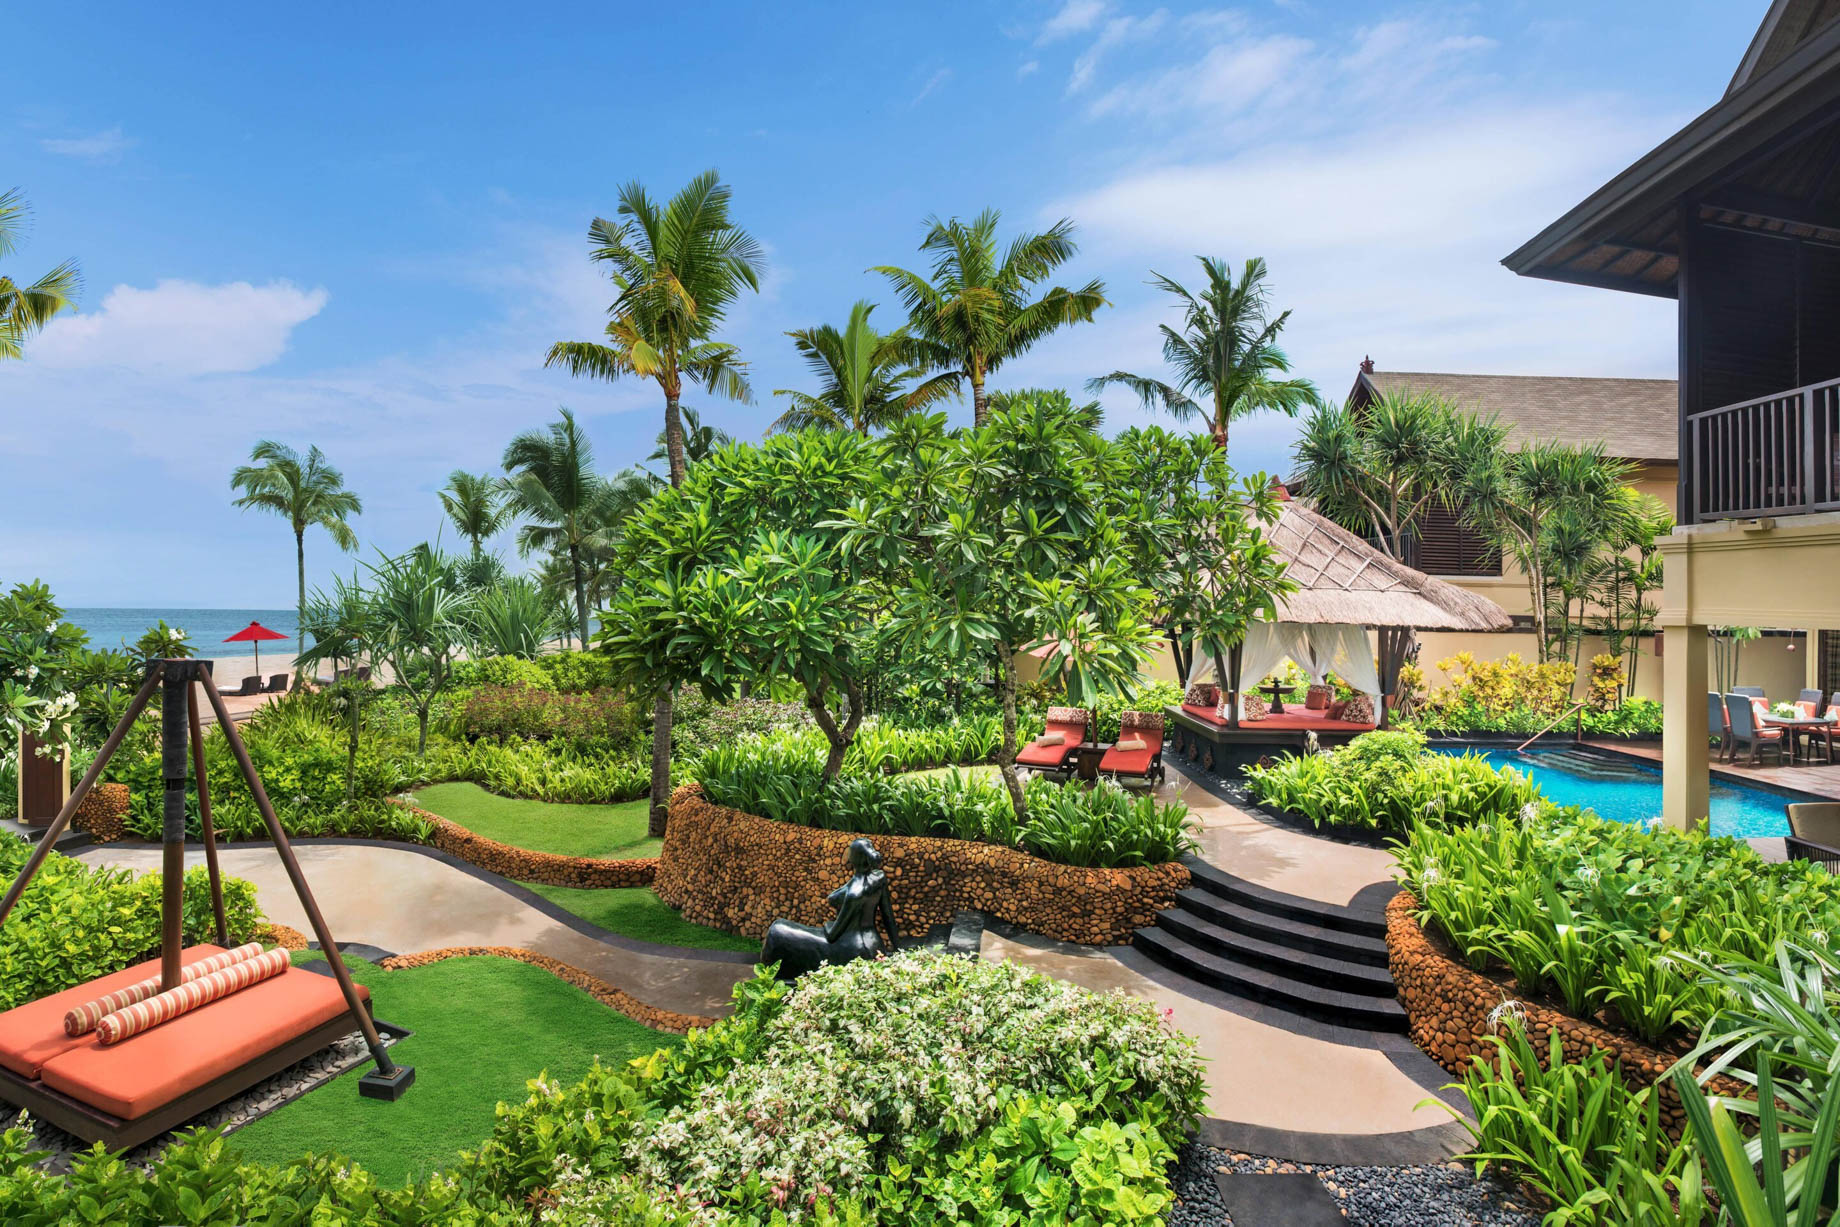 The St. Regis Bali Resort – Bali, Indonesia – Strand Residence Guest Room Private Garden